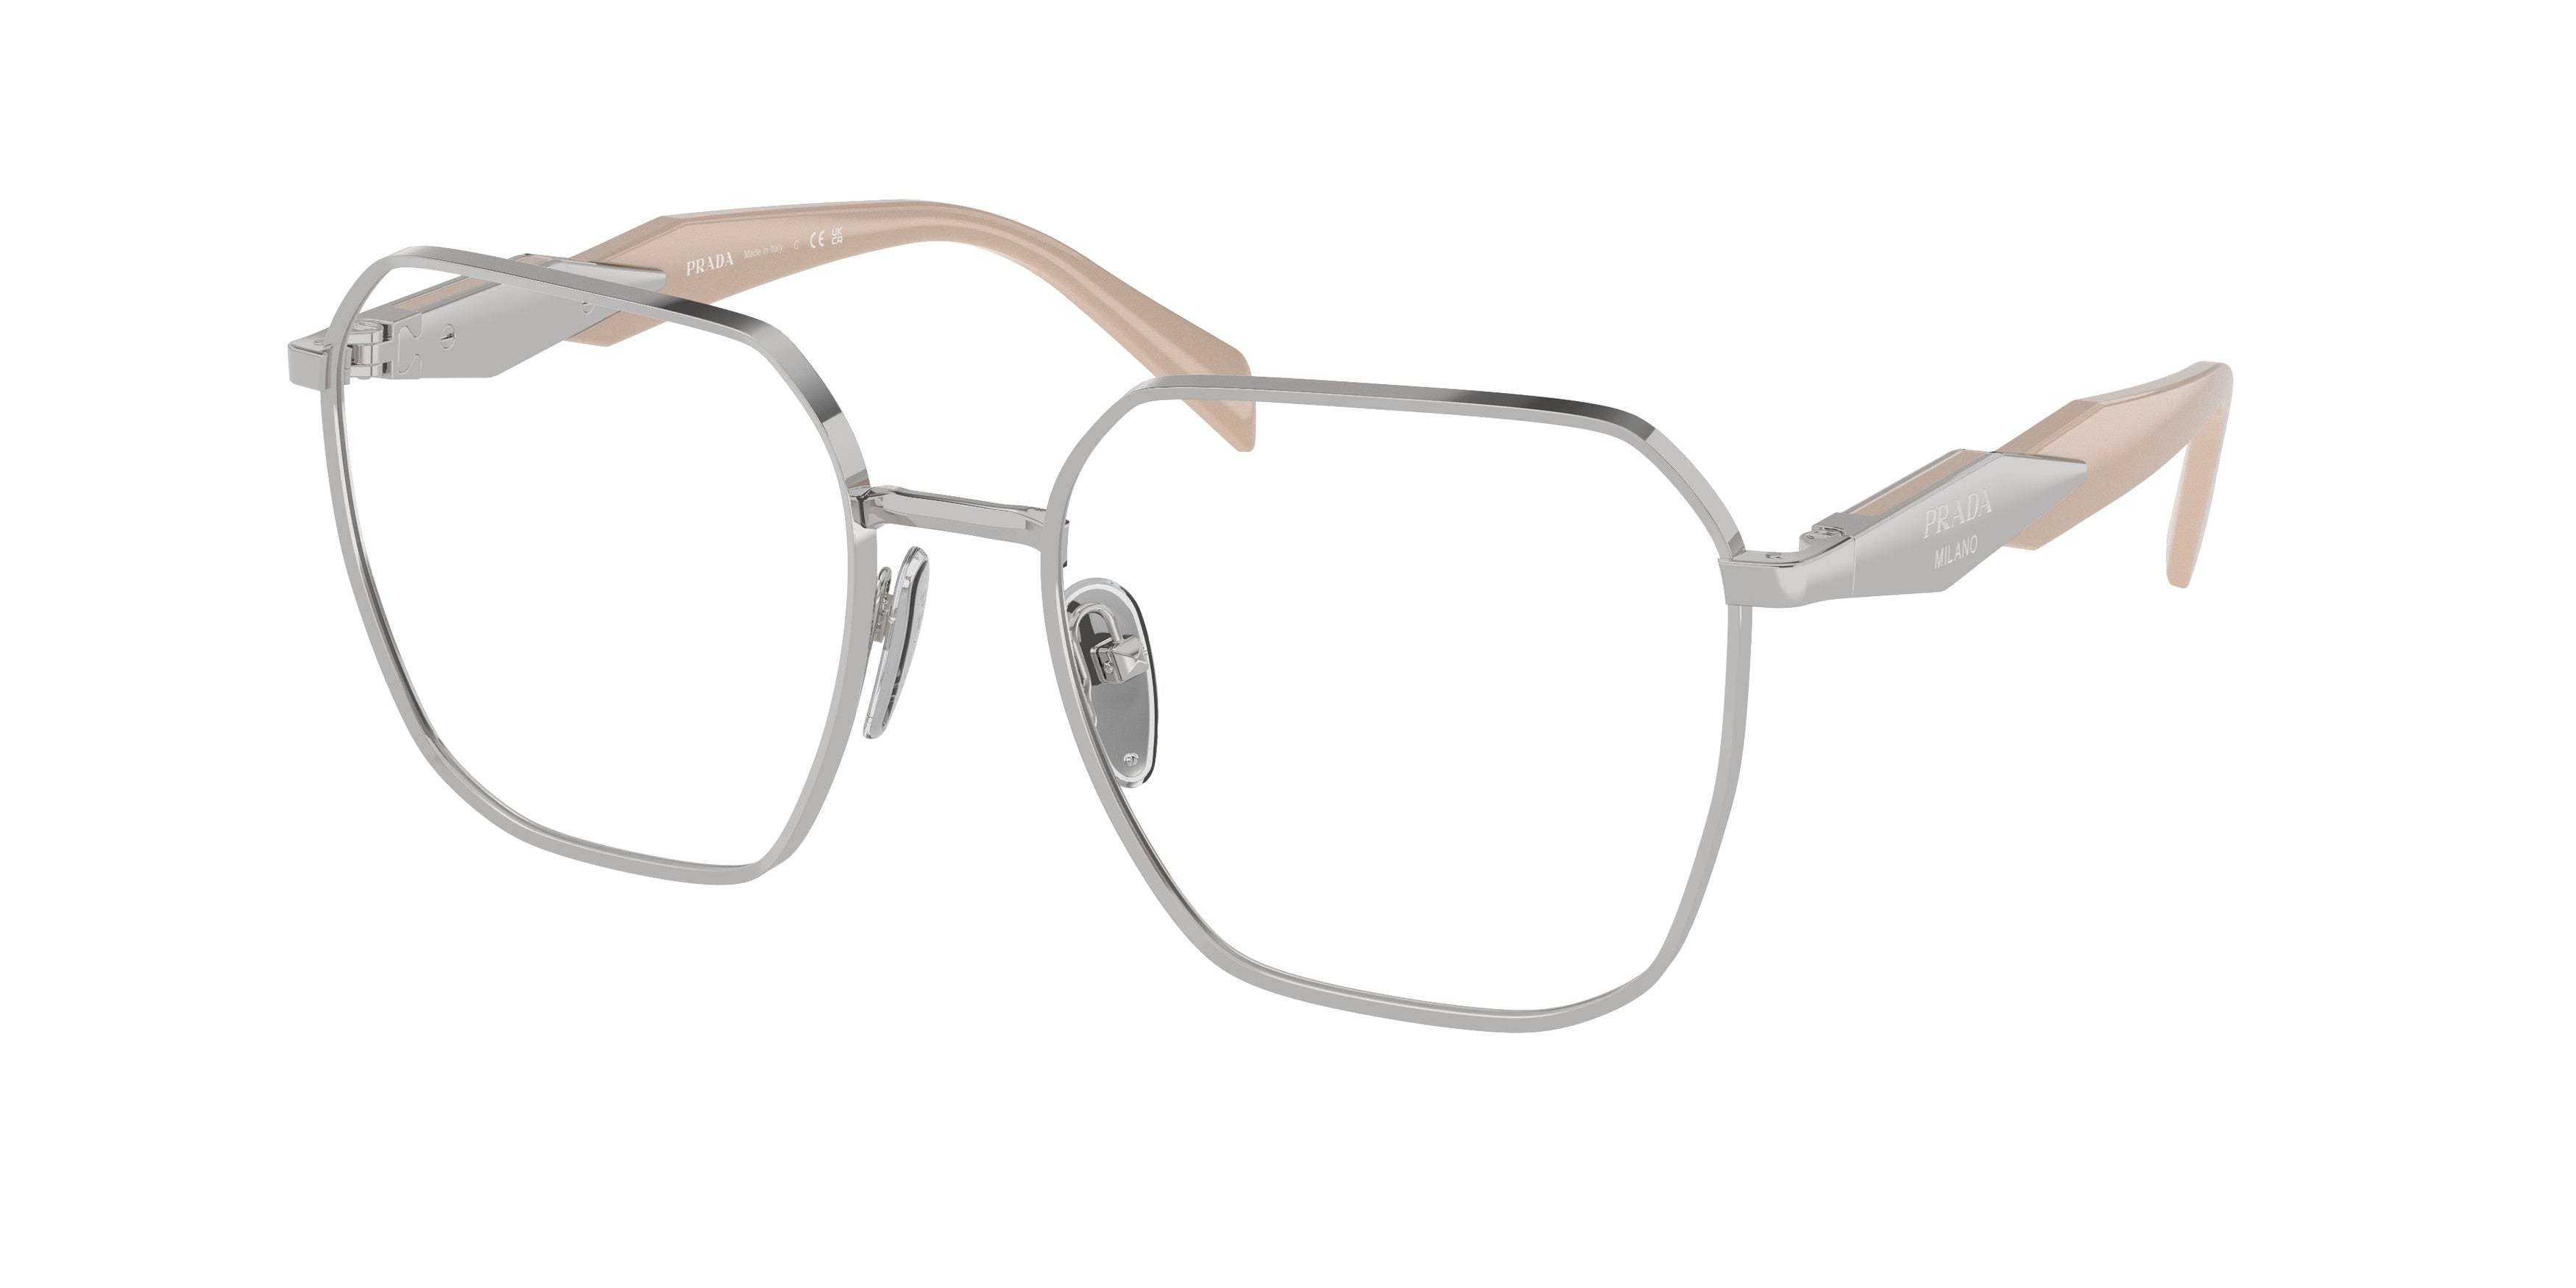 Prada PR56ZV Square Eyeglasses  1BC1O1-Silver 55-140-18 - Color Map Silver